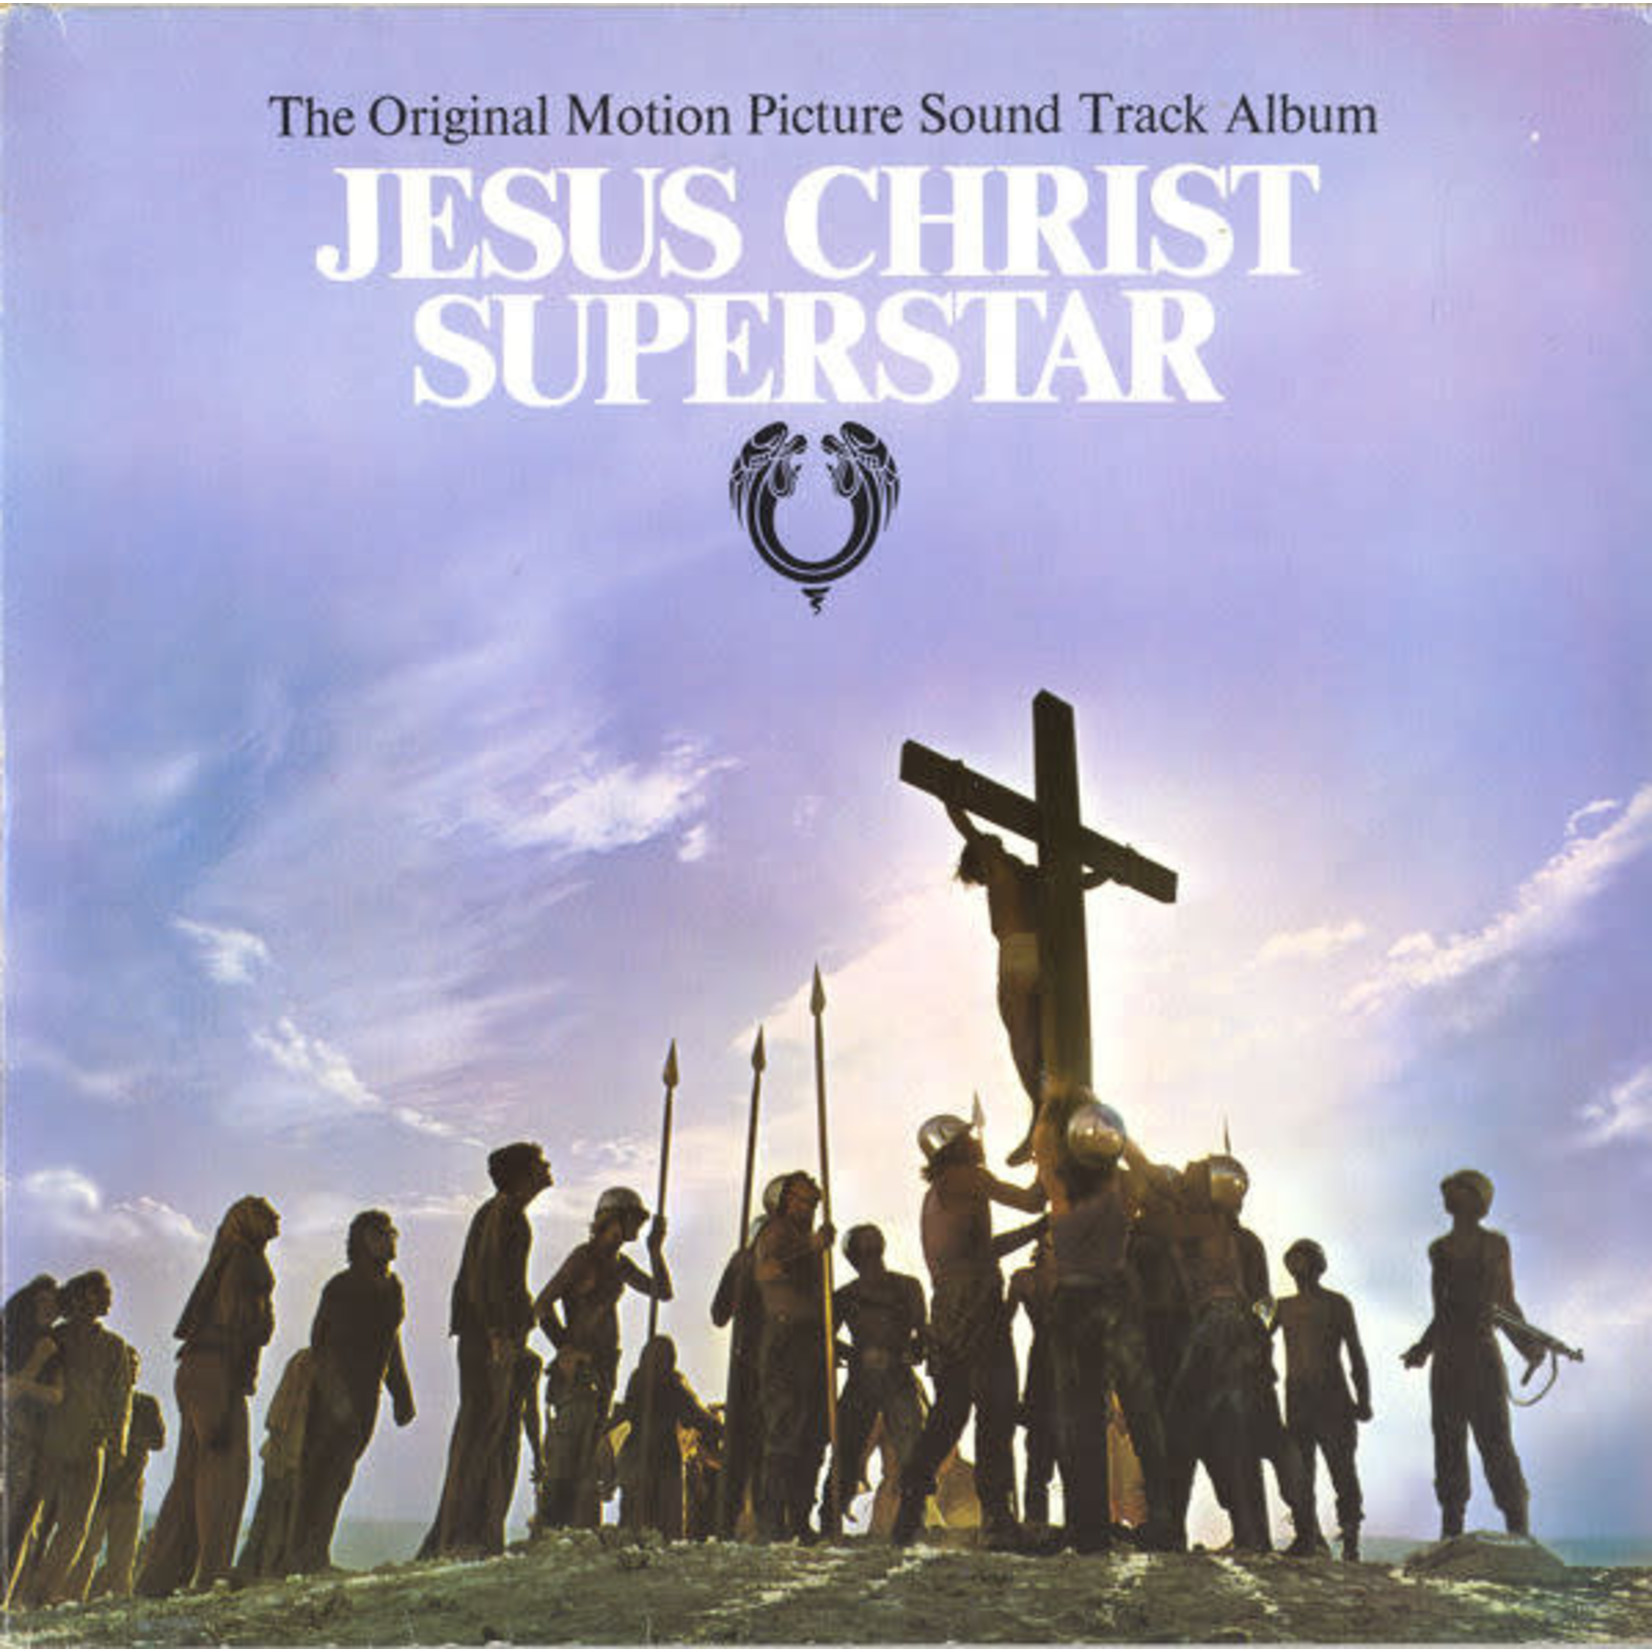 Andrew Lloyd Webber – Jesus Christ Superstar The Original Motion Picture Sound Track Album (G+, 1973, 2LP, MCA Records – MCA2-11000, Canada)